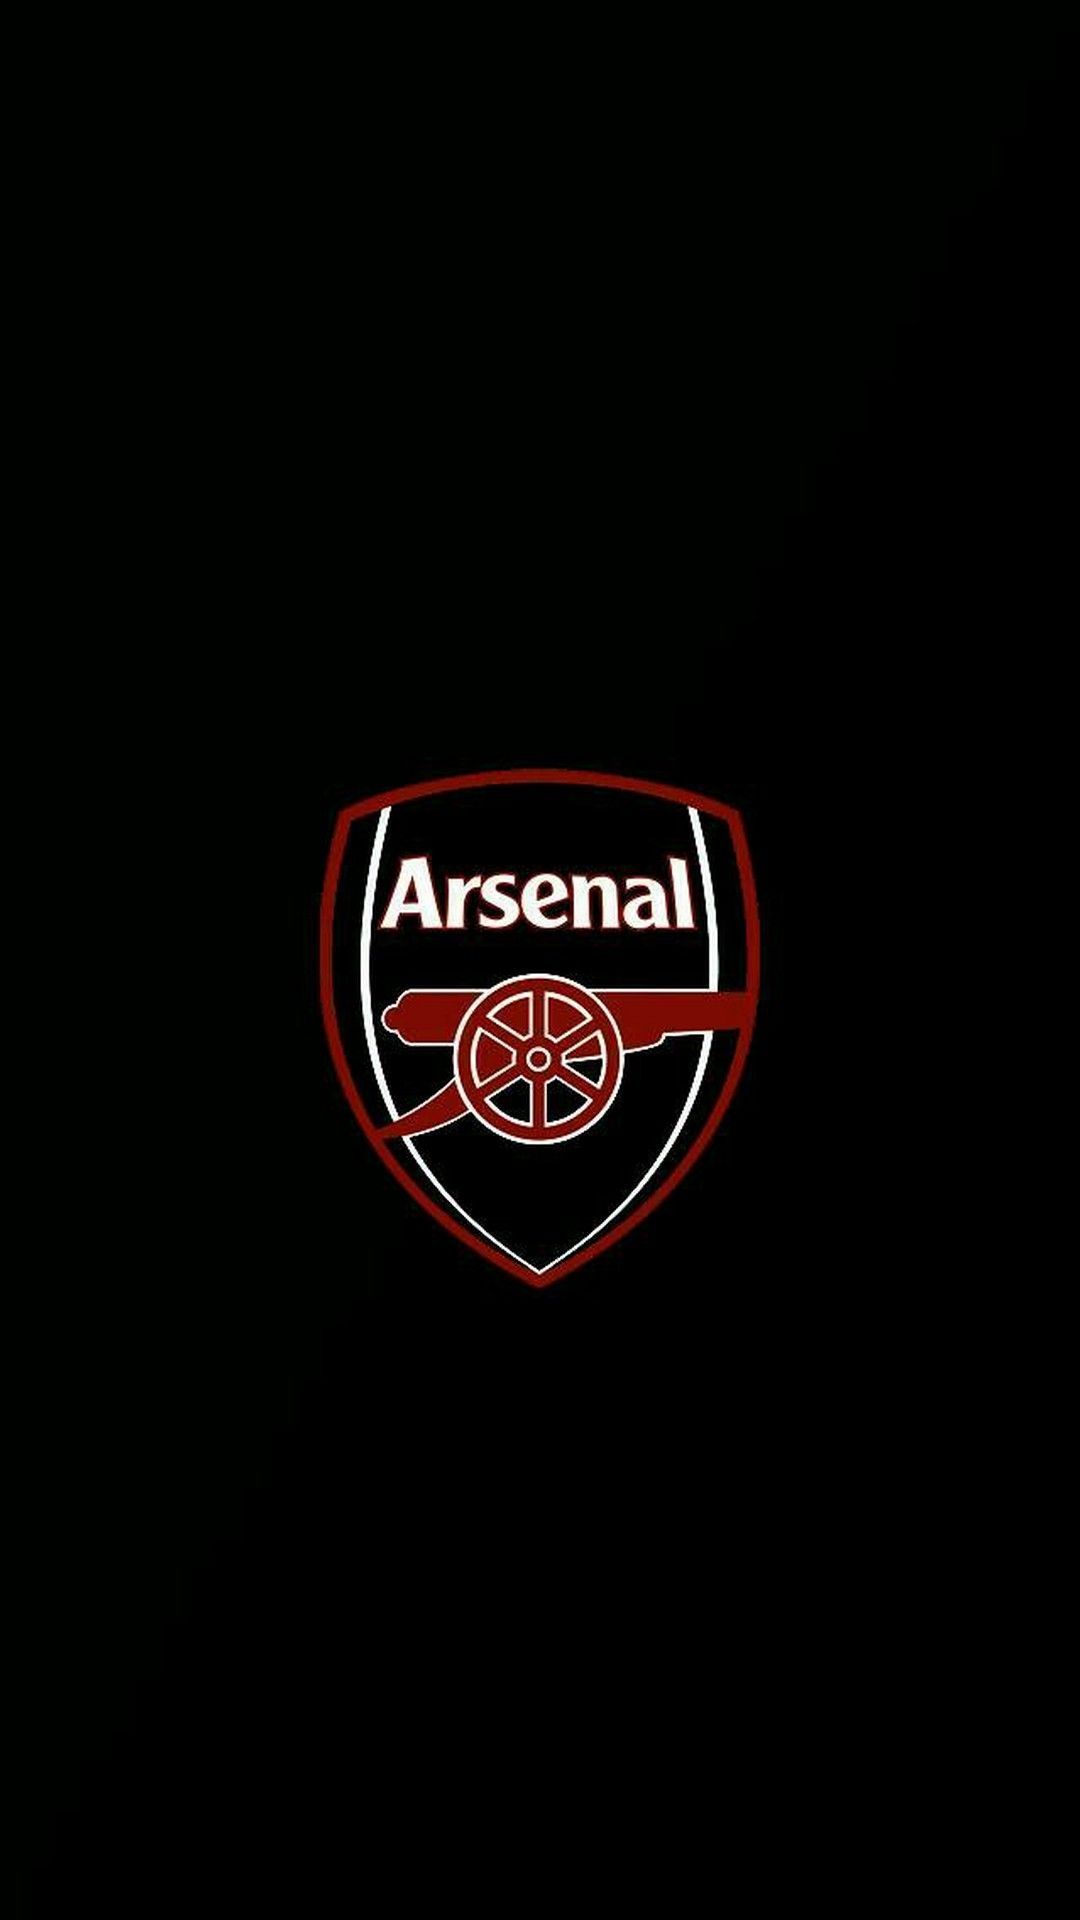 Arsenal Mobile Wallpaper Free Arsenal Mobile Background